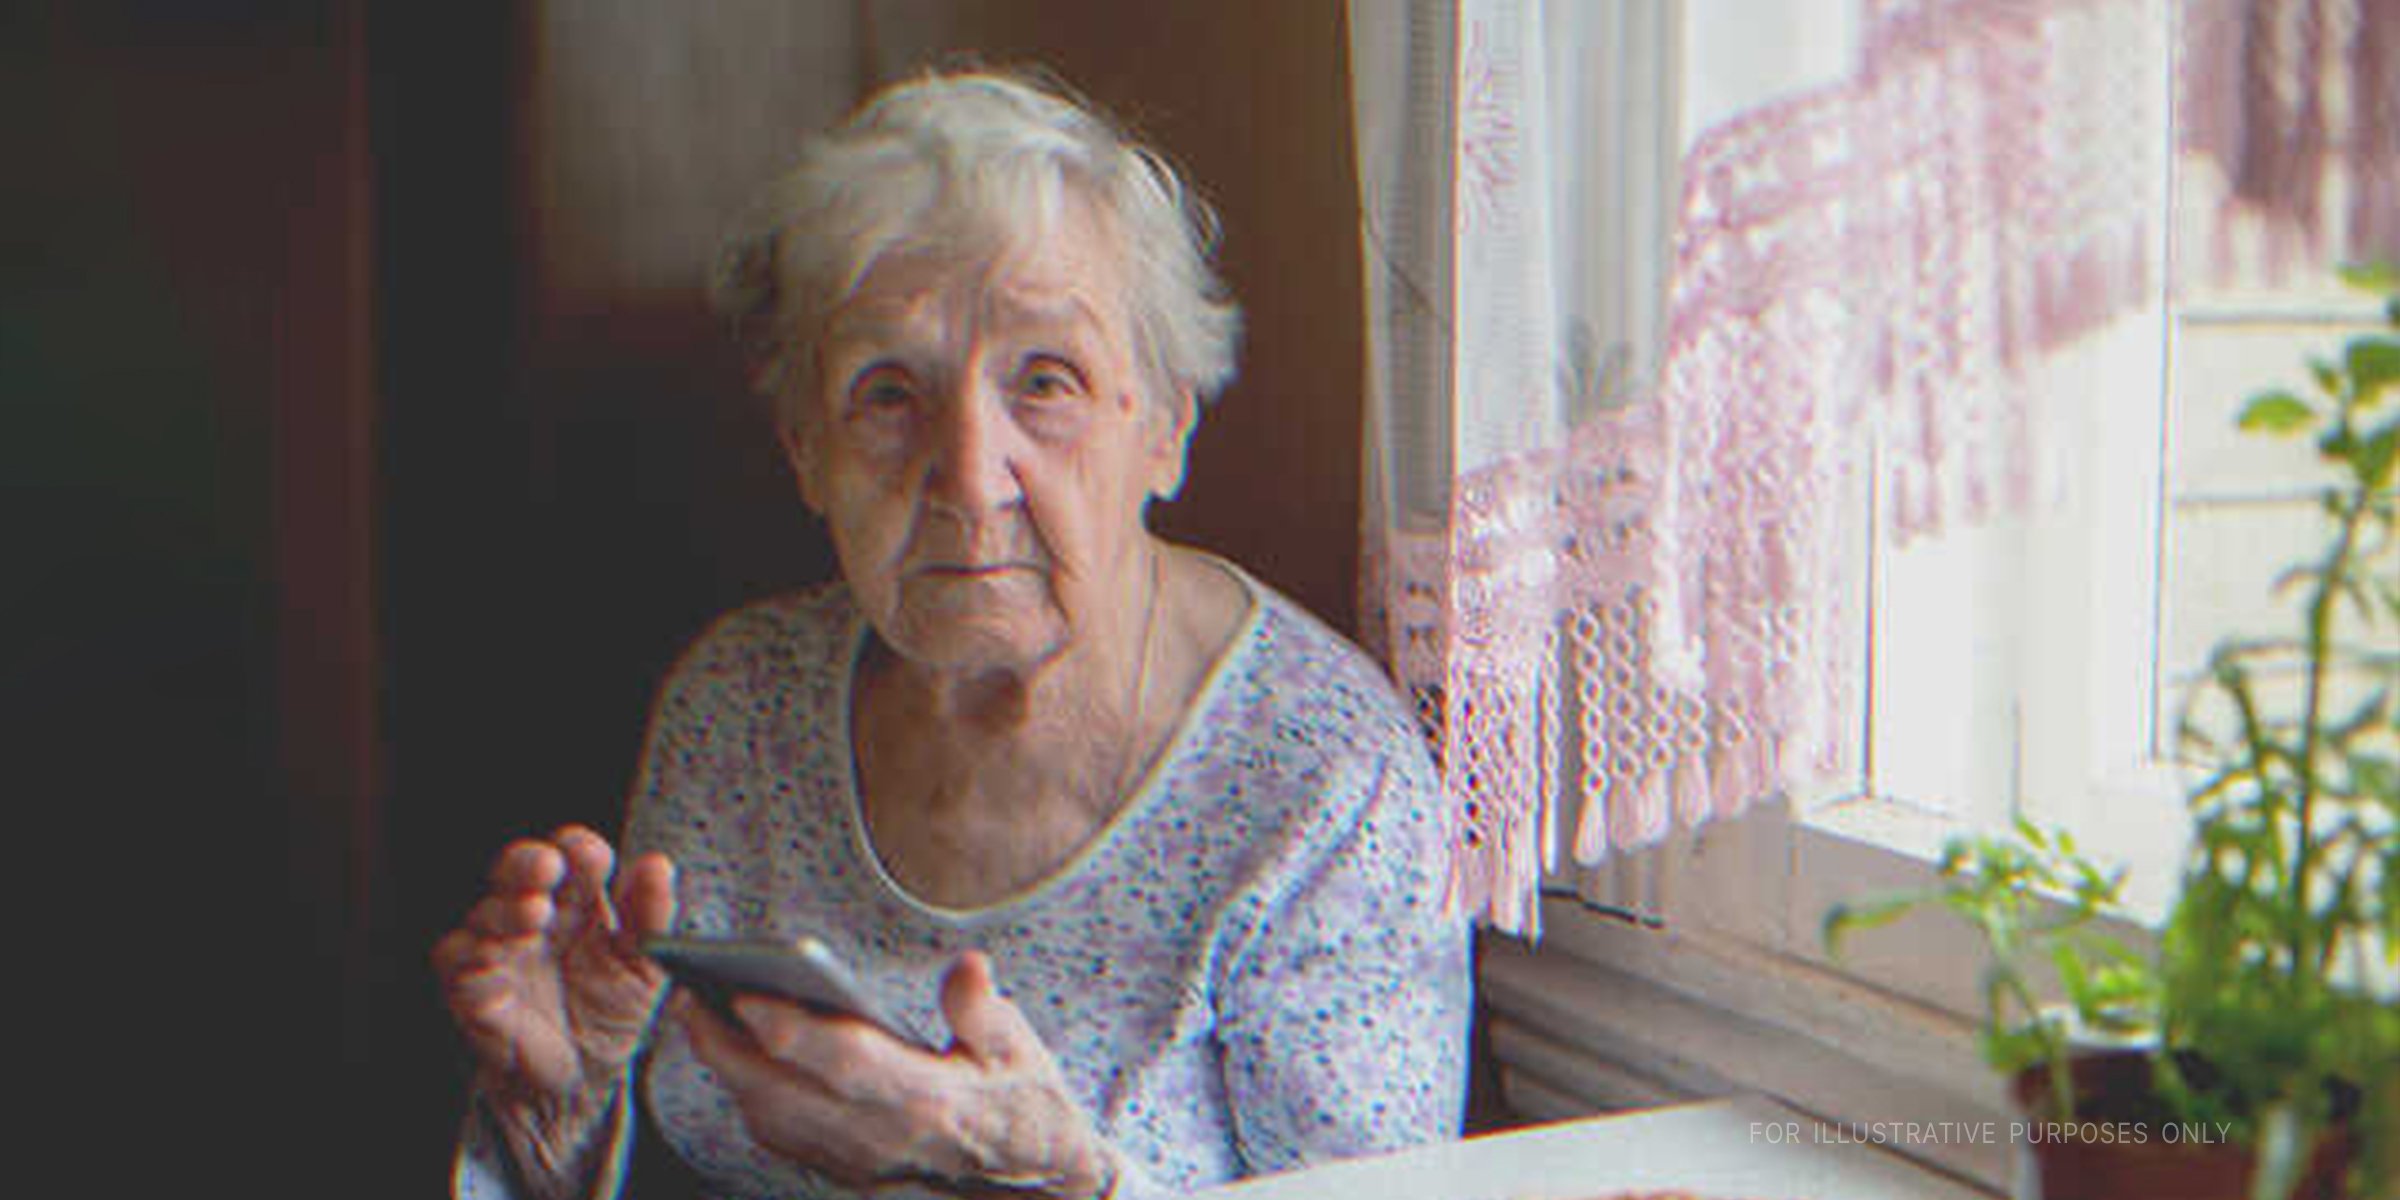 Elderly woman checking her phone | Source: Shutterstock